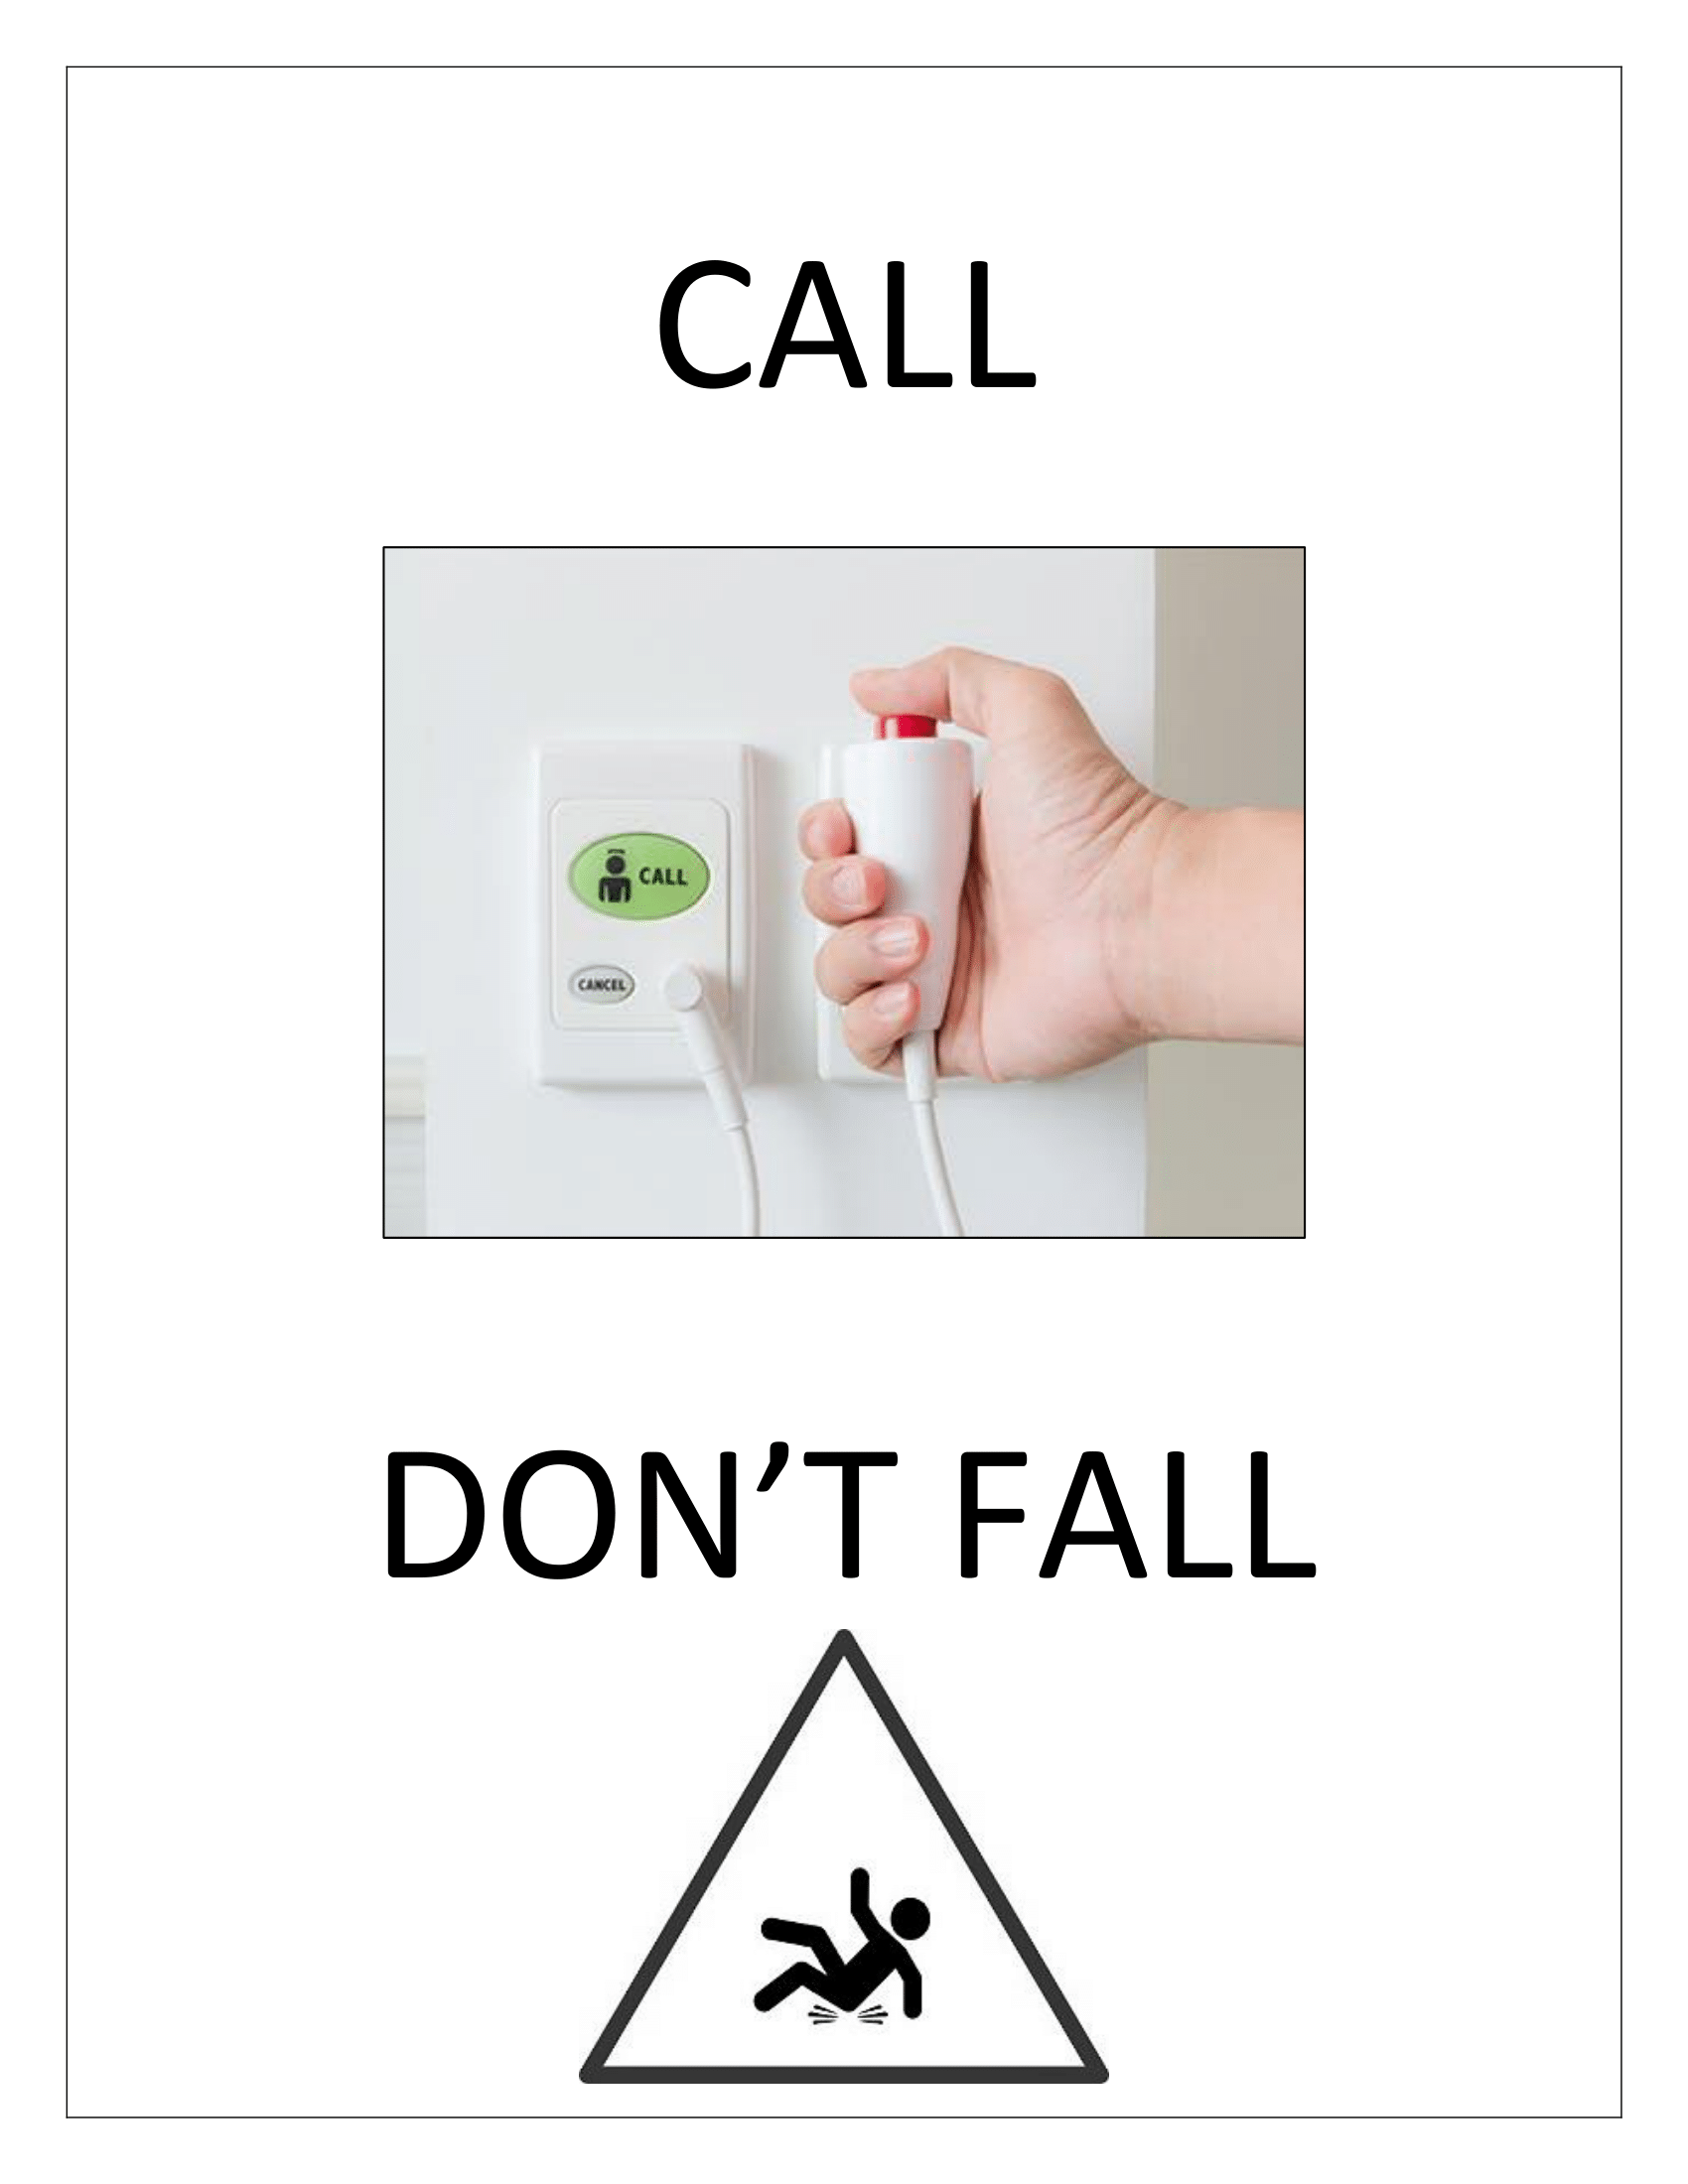 Call Don't Fall - Bathroom